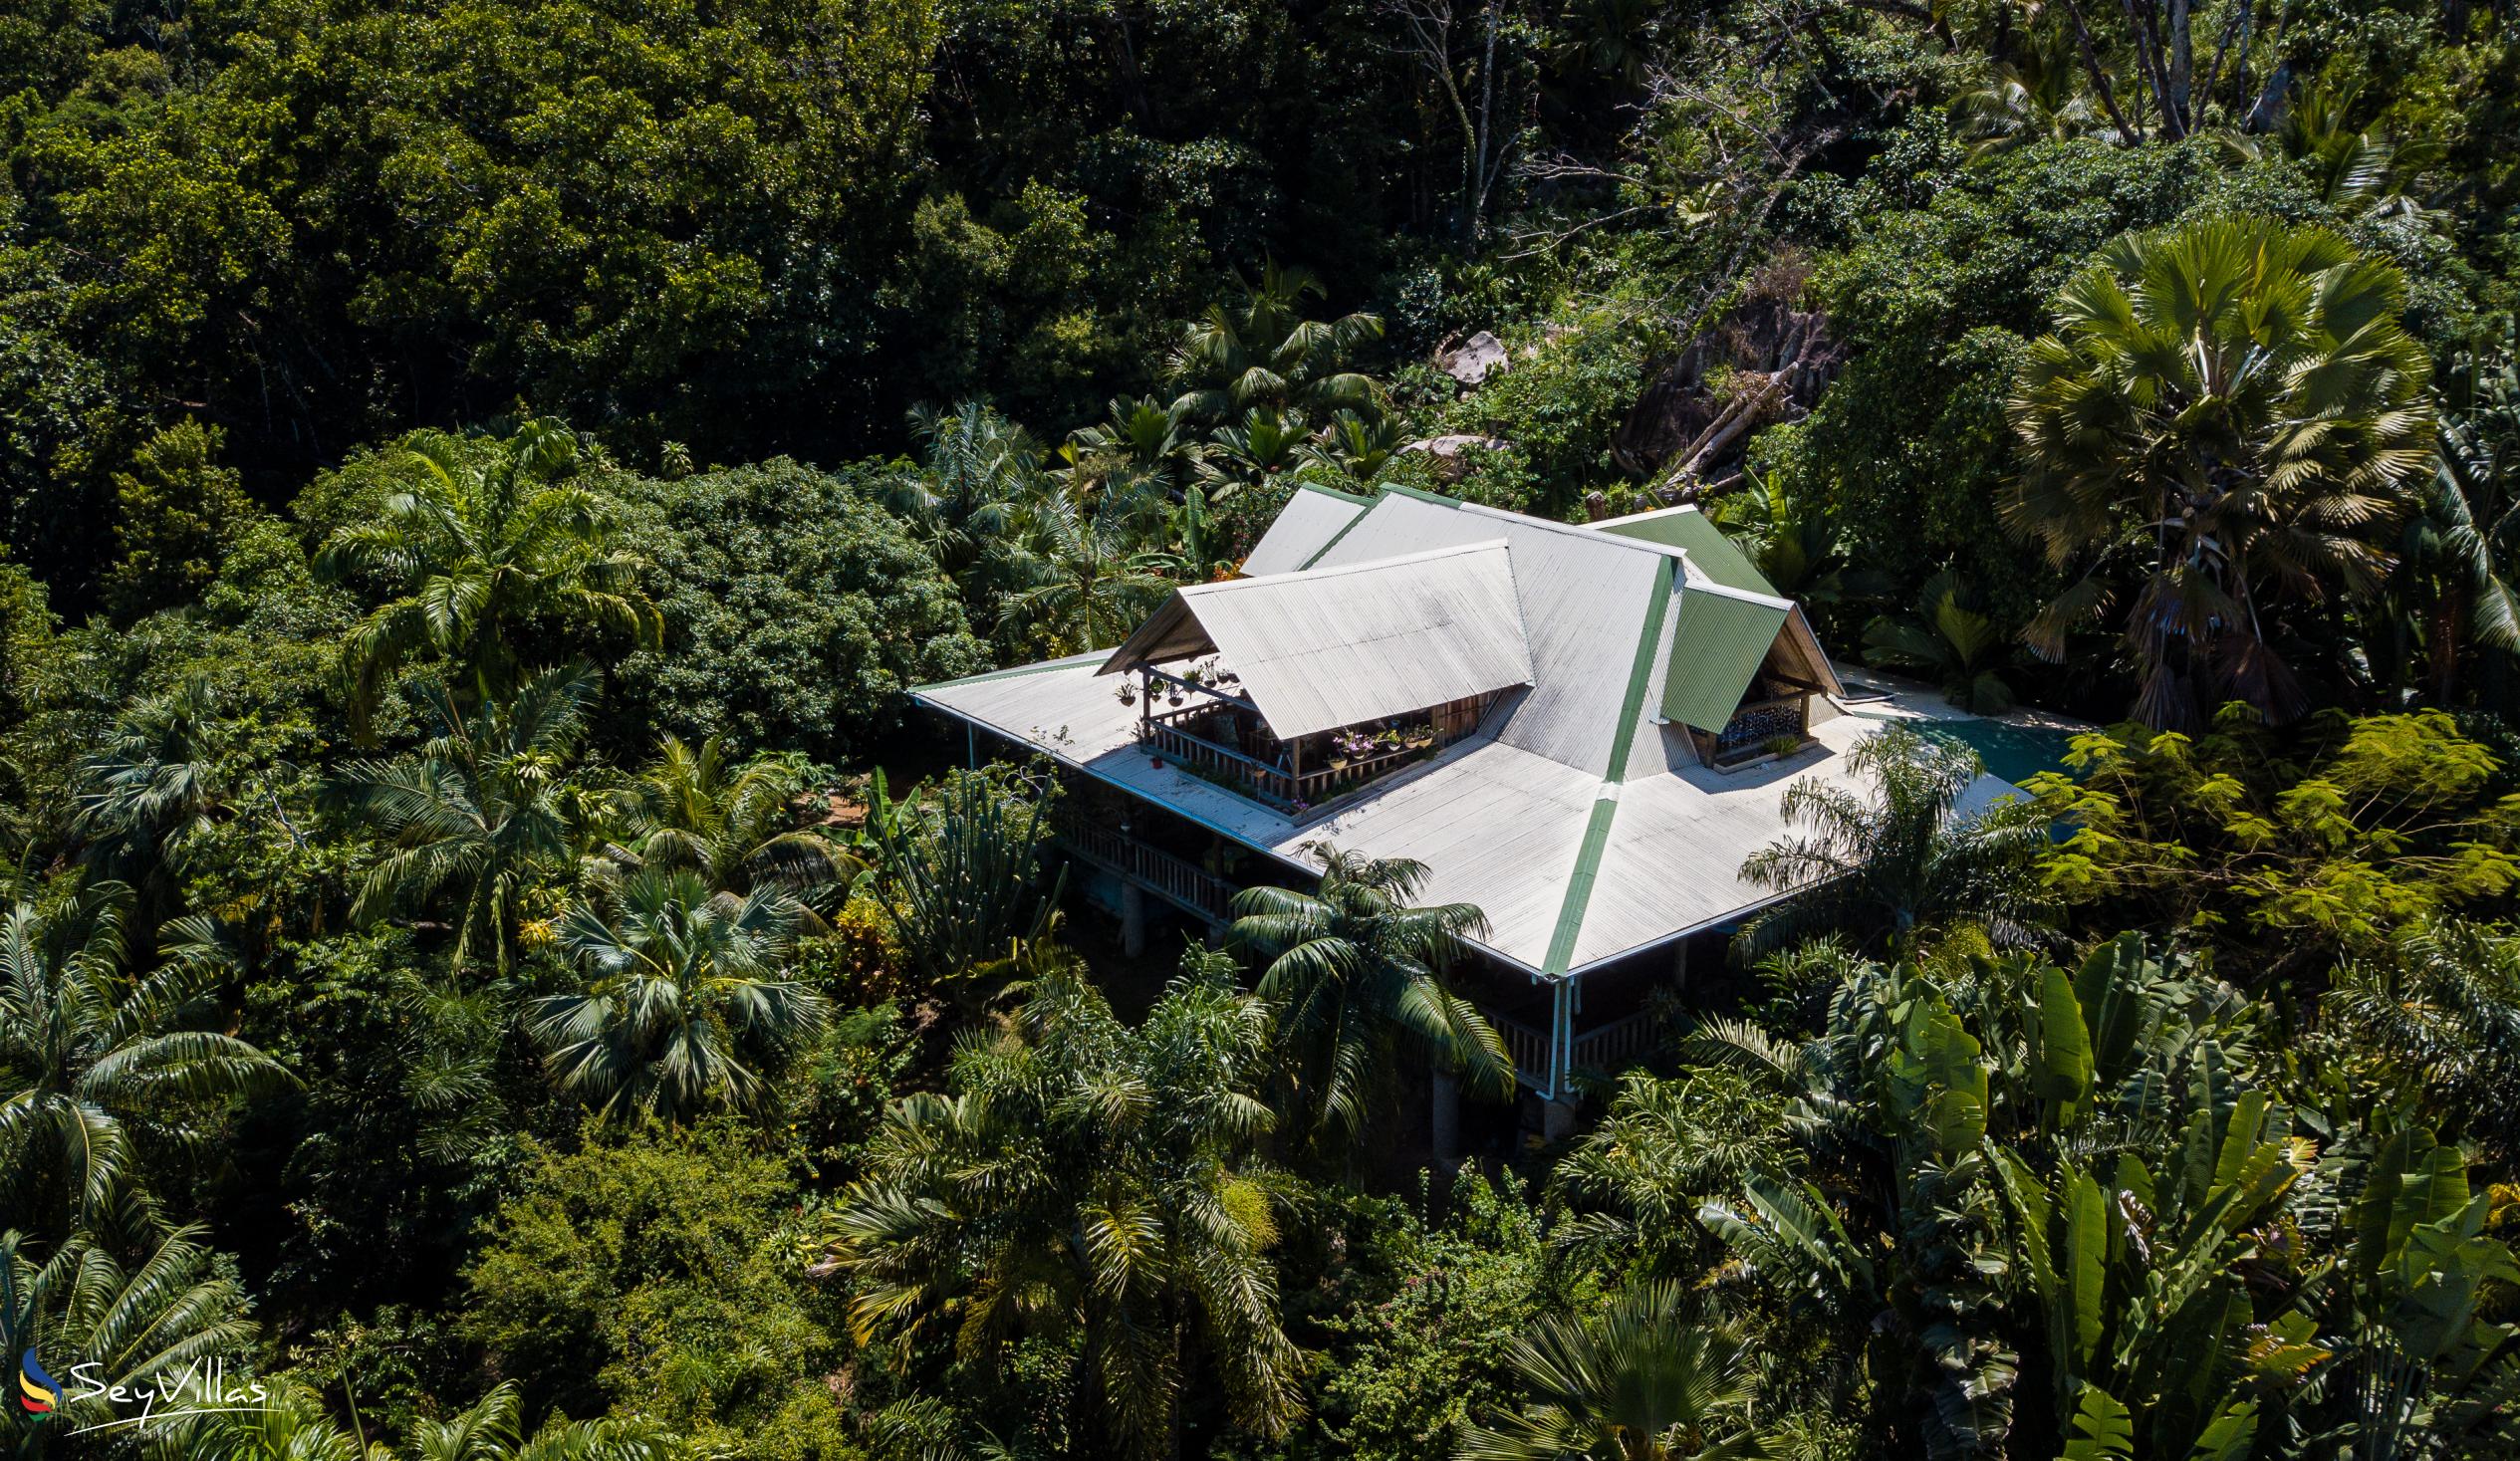 Foto 5: Secret Villa - Aussenbereich - La Digue (Seychellen)